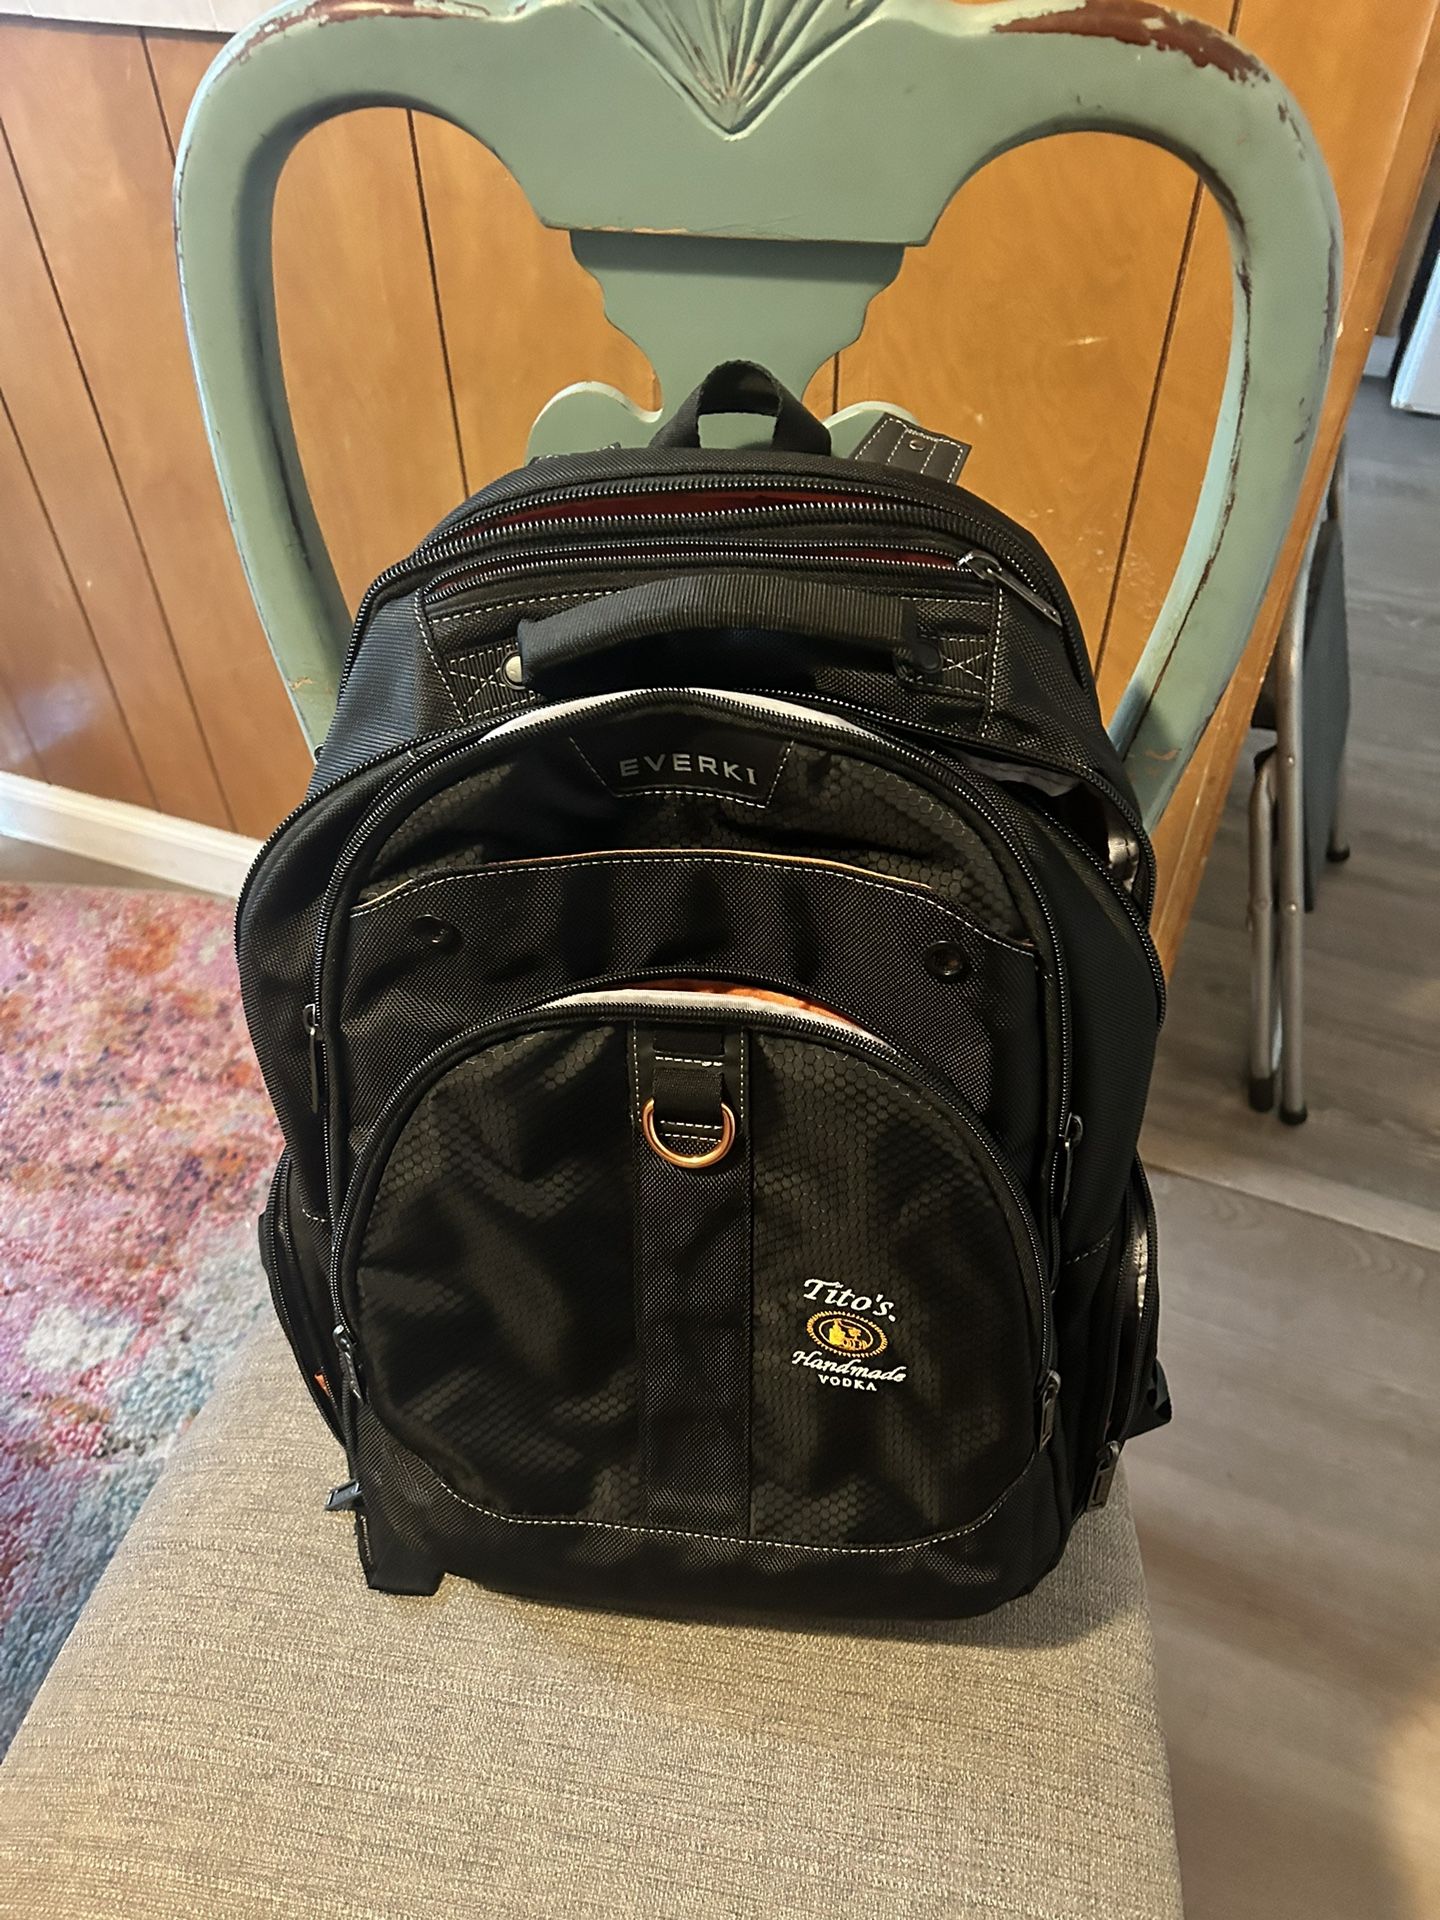 Everki Laptop Backpack 